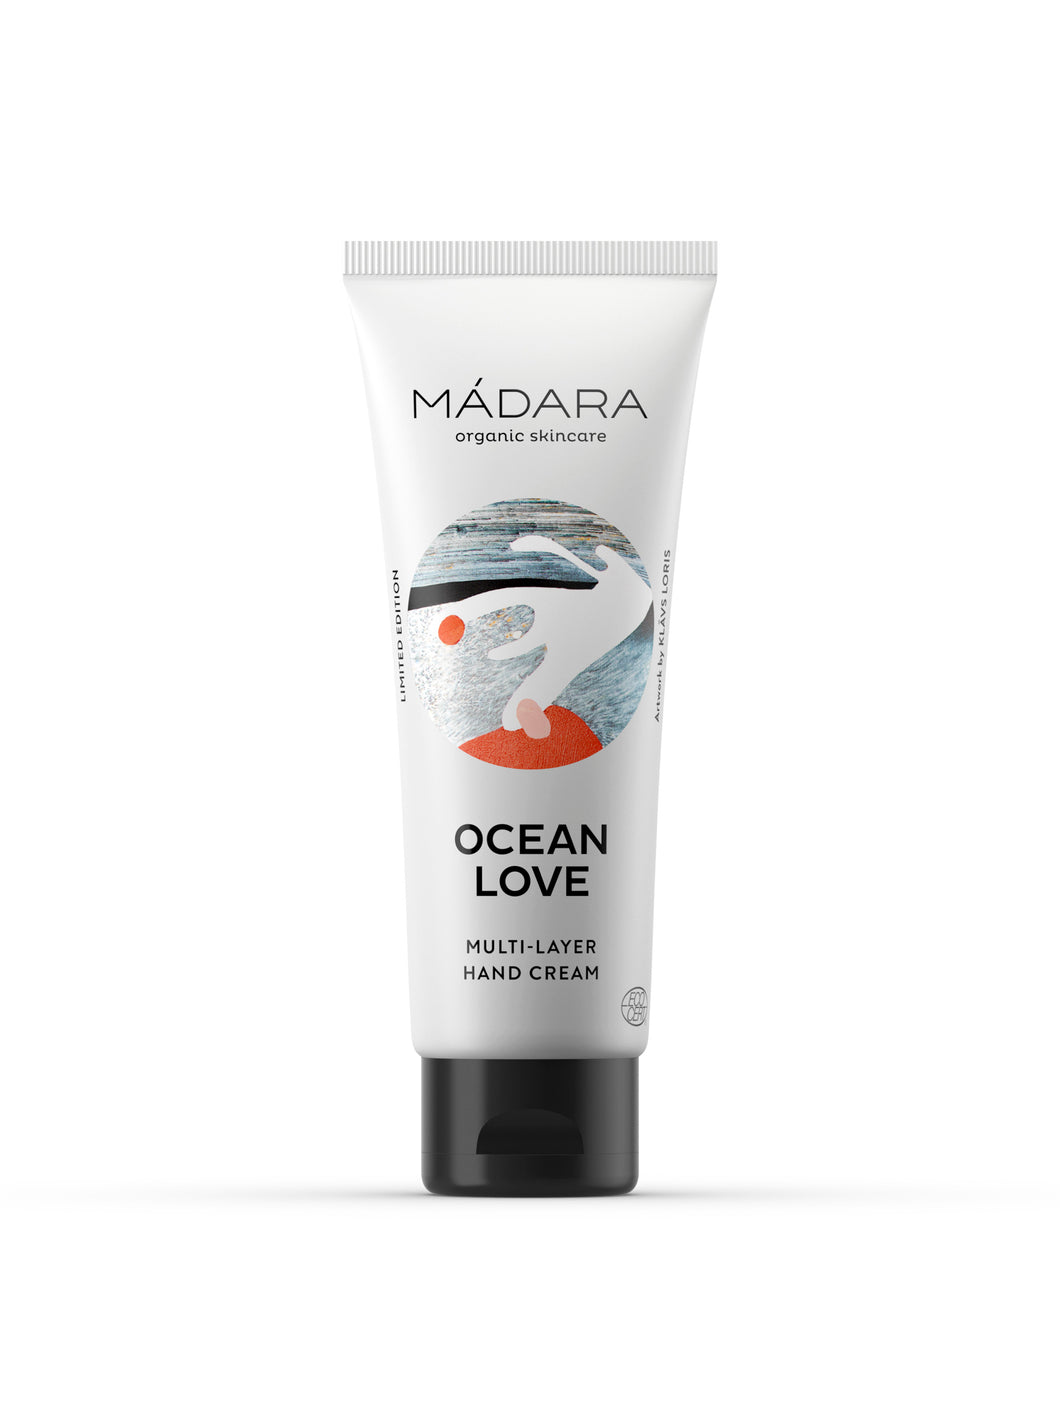 Mádara Ocean Love Naturkosmetik Multi-Layer Hand Cream